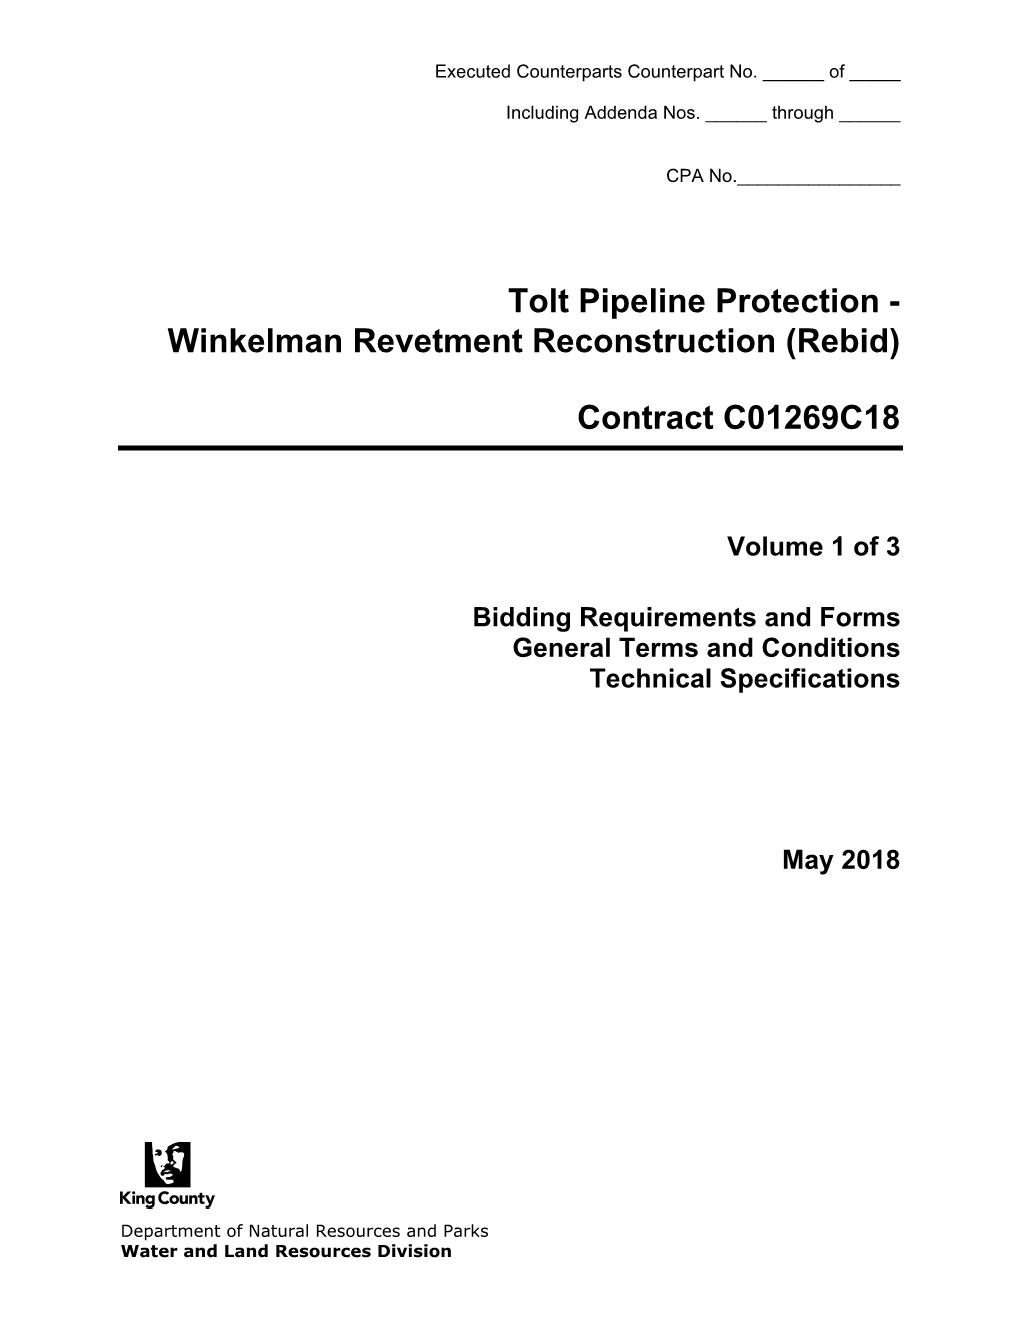 Tolt Pipeline Protection - Winkelman Revetment Reconstruction (Rebid)